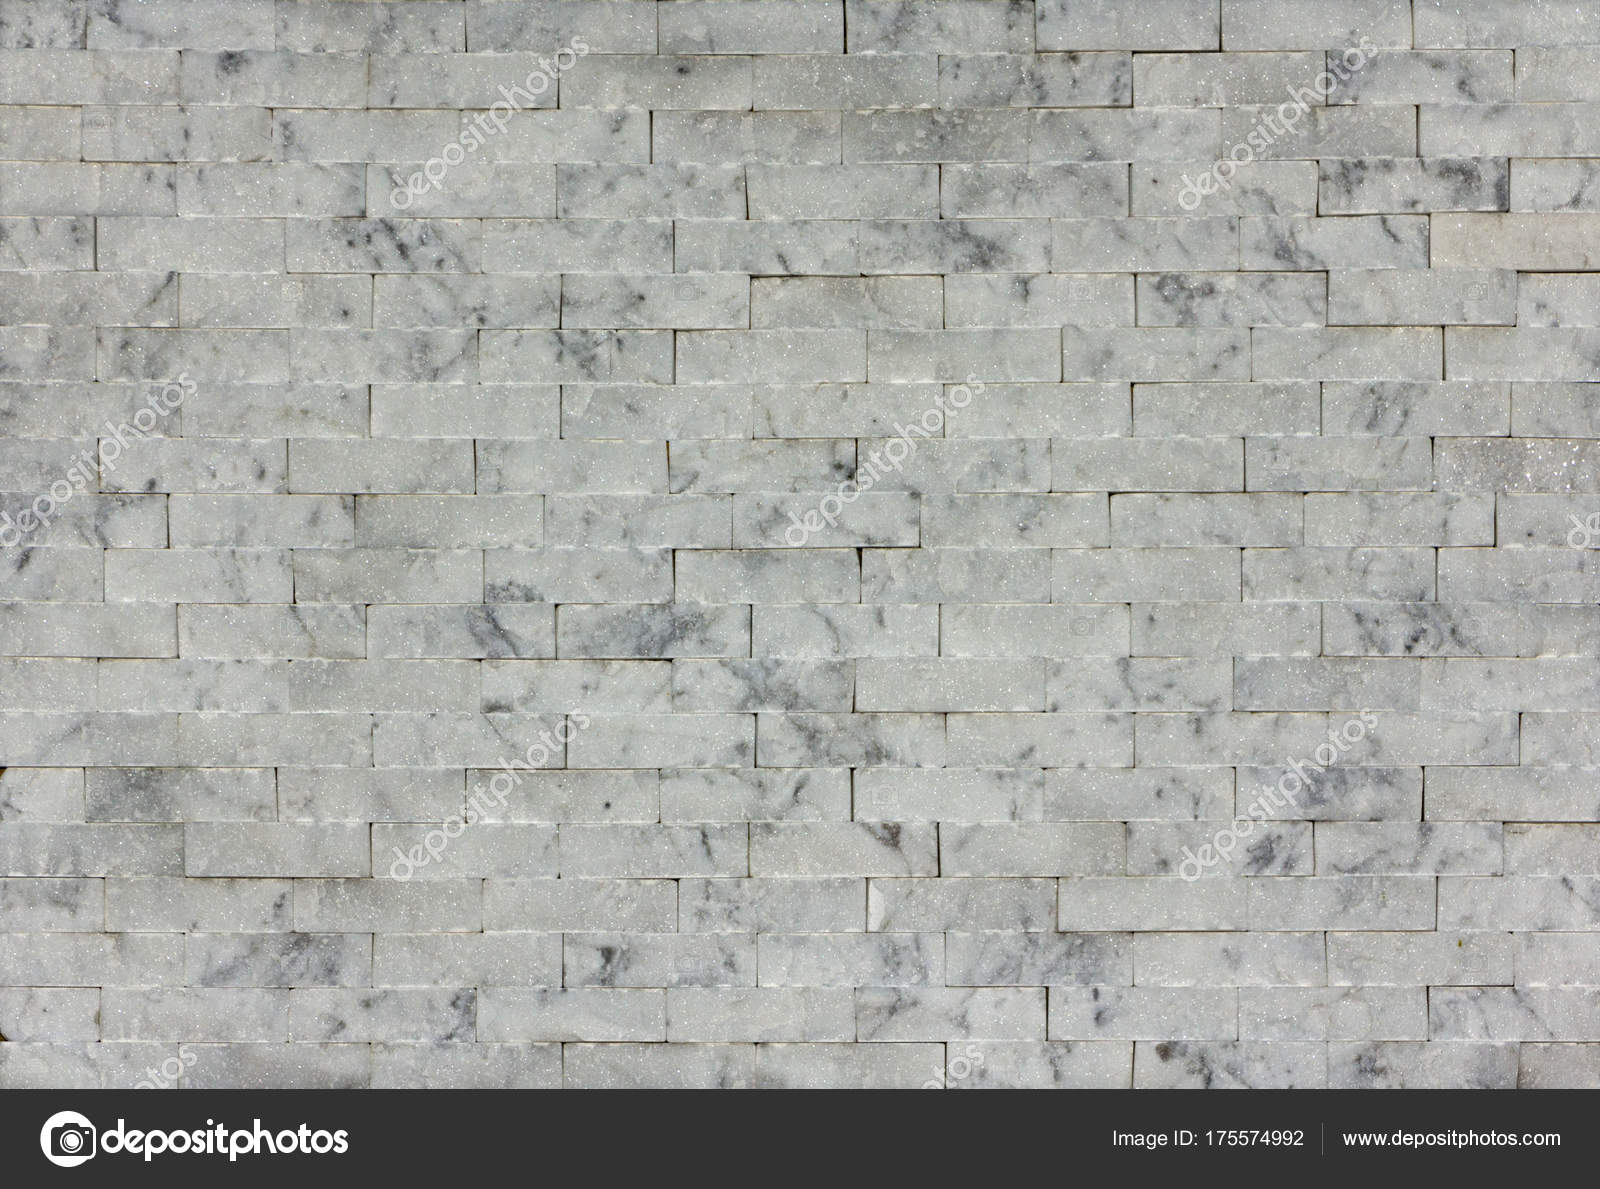 Marble Texture Decorative Brick Wall, Decorative Brick Wall Tiles